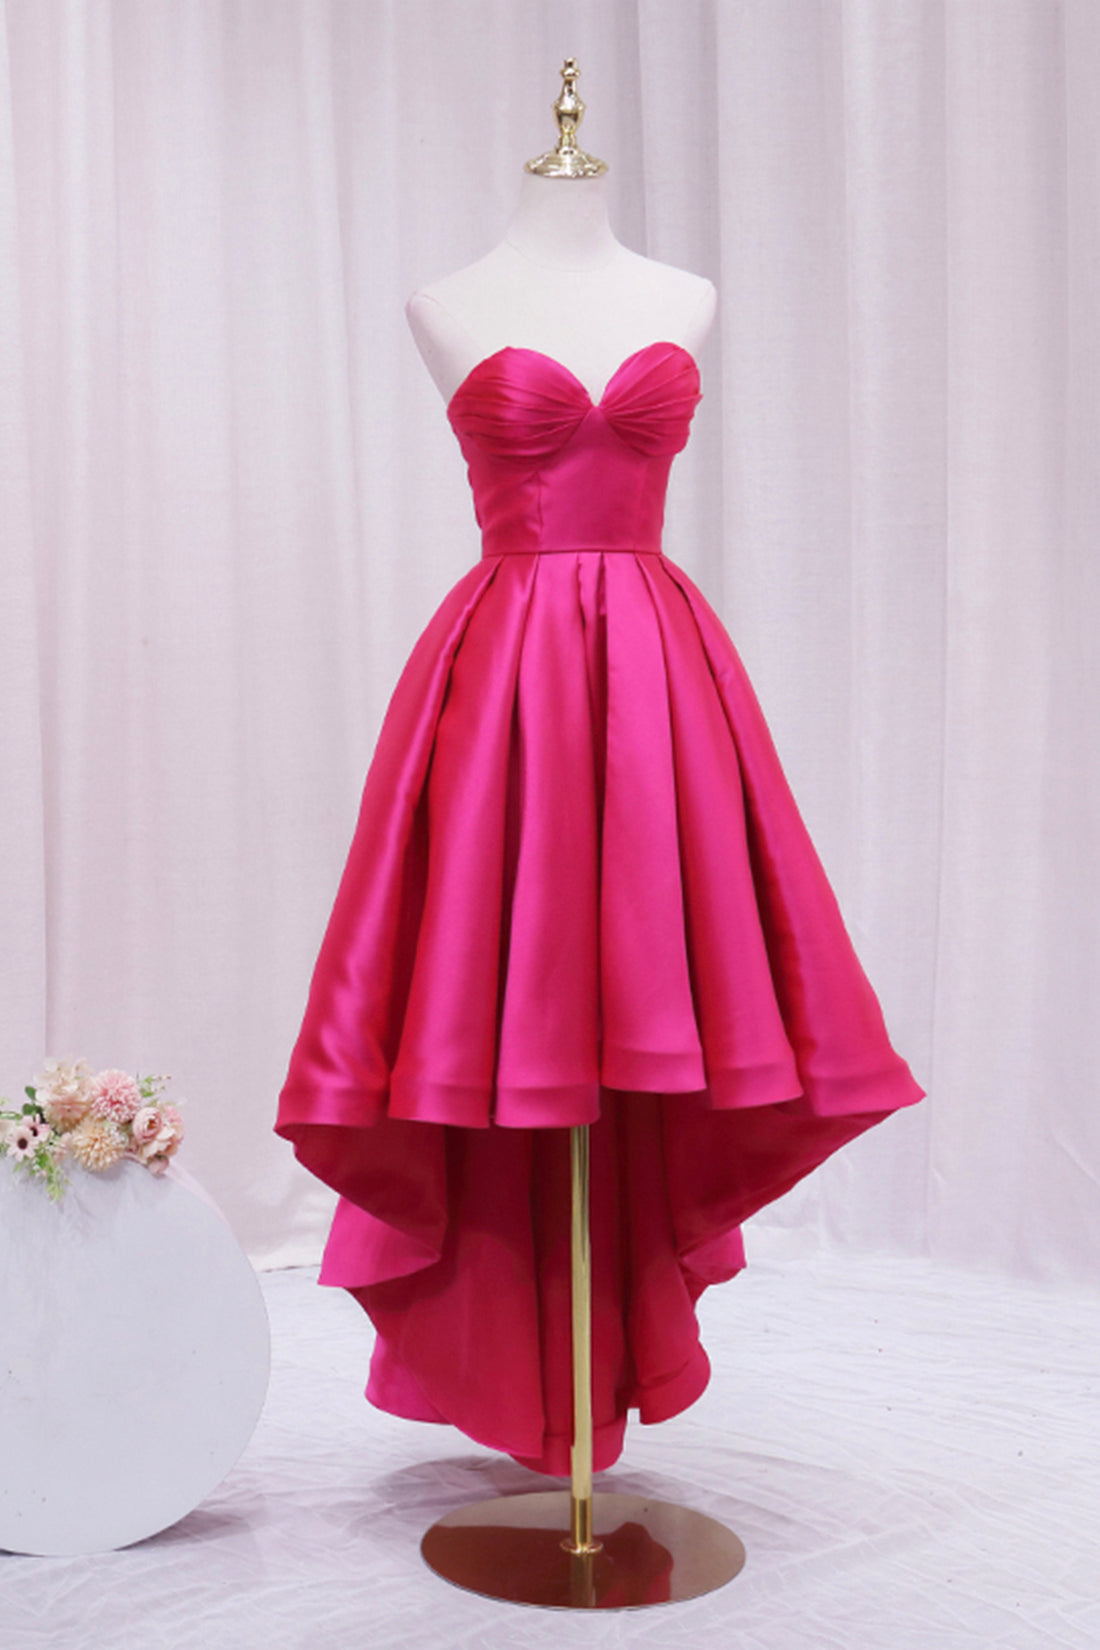 The Best Cute Party Dresses to Shop on Amazon Fashion | POPSUGAR Fashion